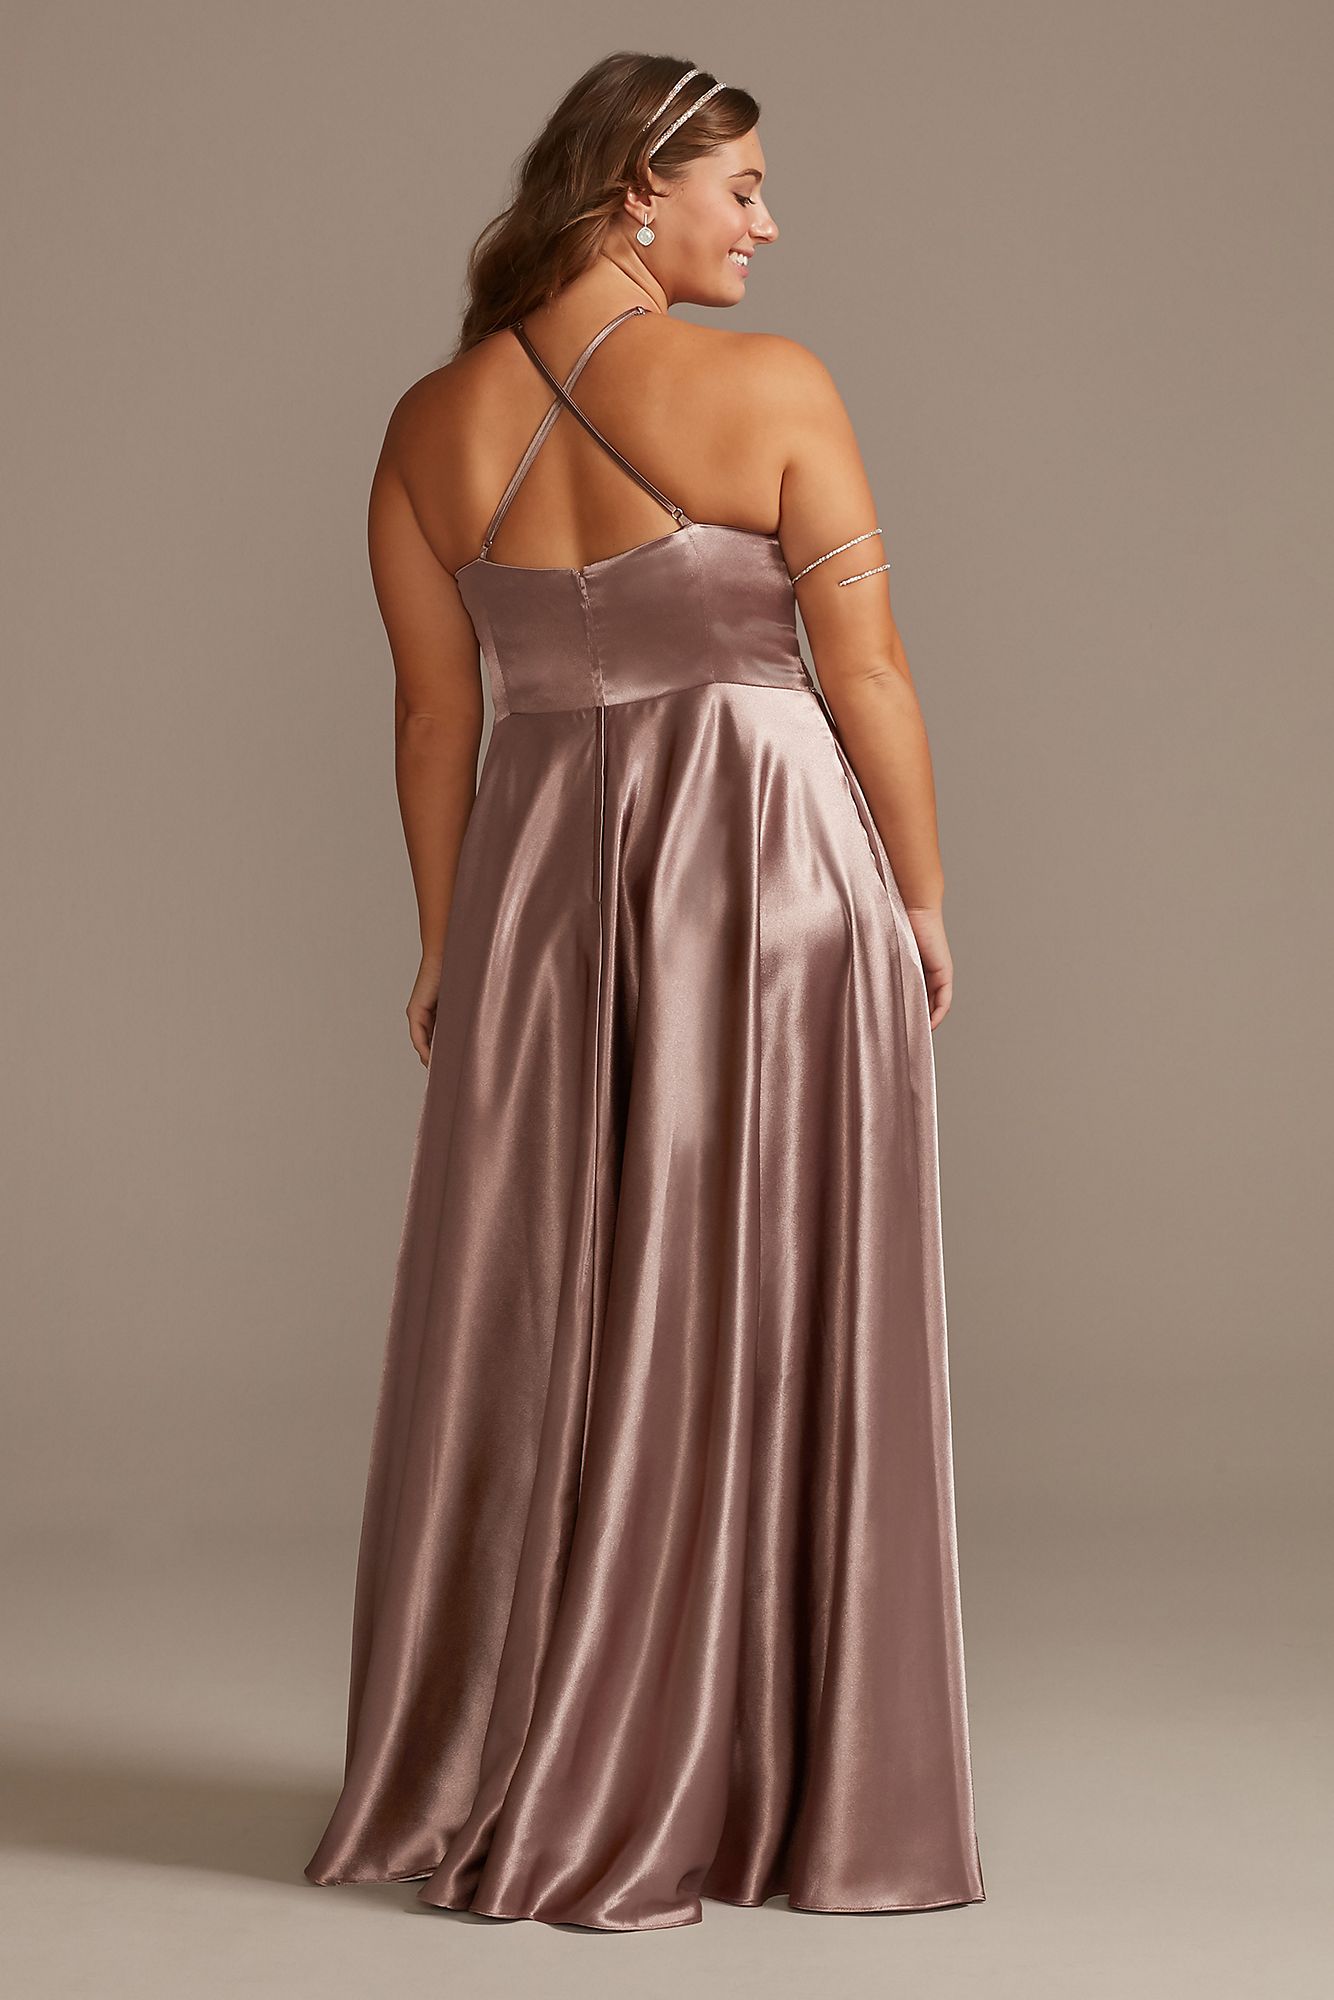 Halter Neck Long Plus Size Satin A-line WBM2452V2W Prom Party Gown with Illusion Cutout Waist